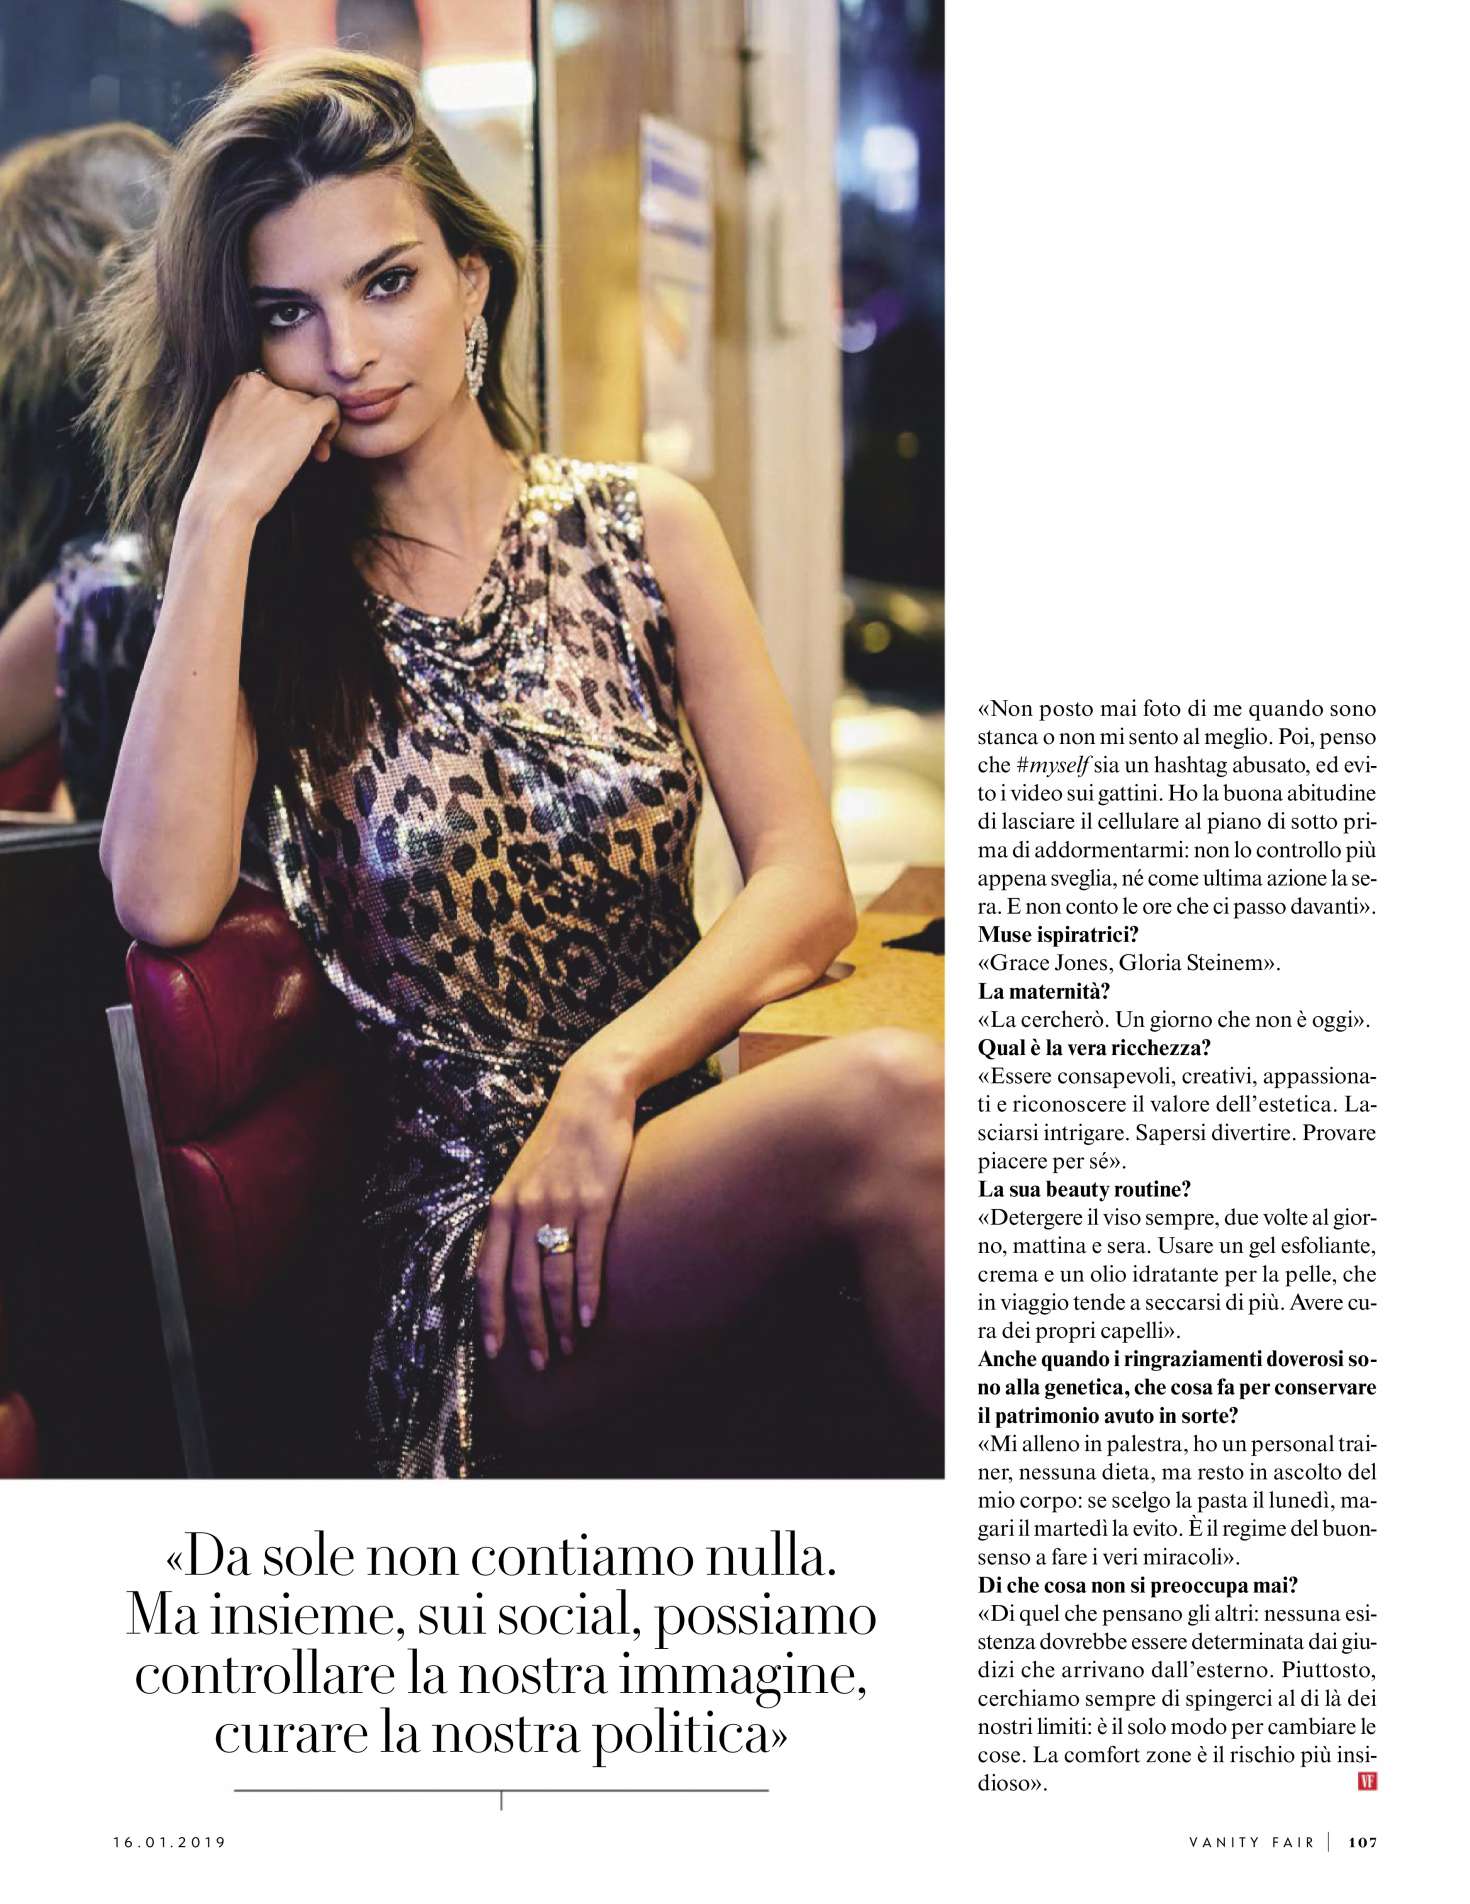 Emily Ratajkowski â€“ Vanity Fair Italy Magazine (January 2019)